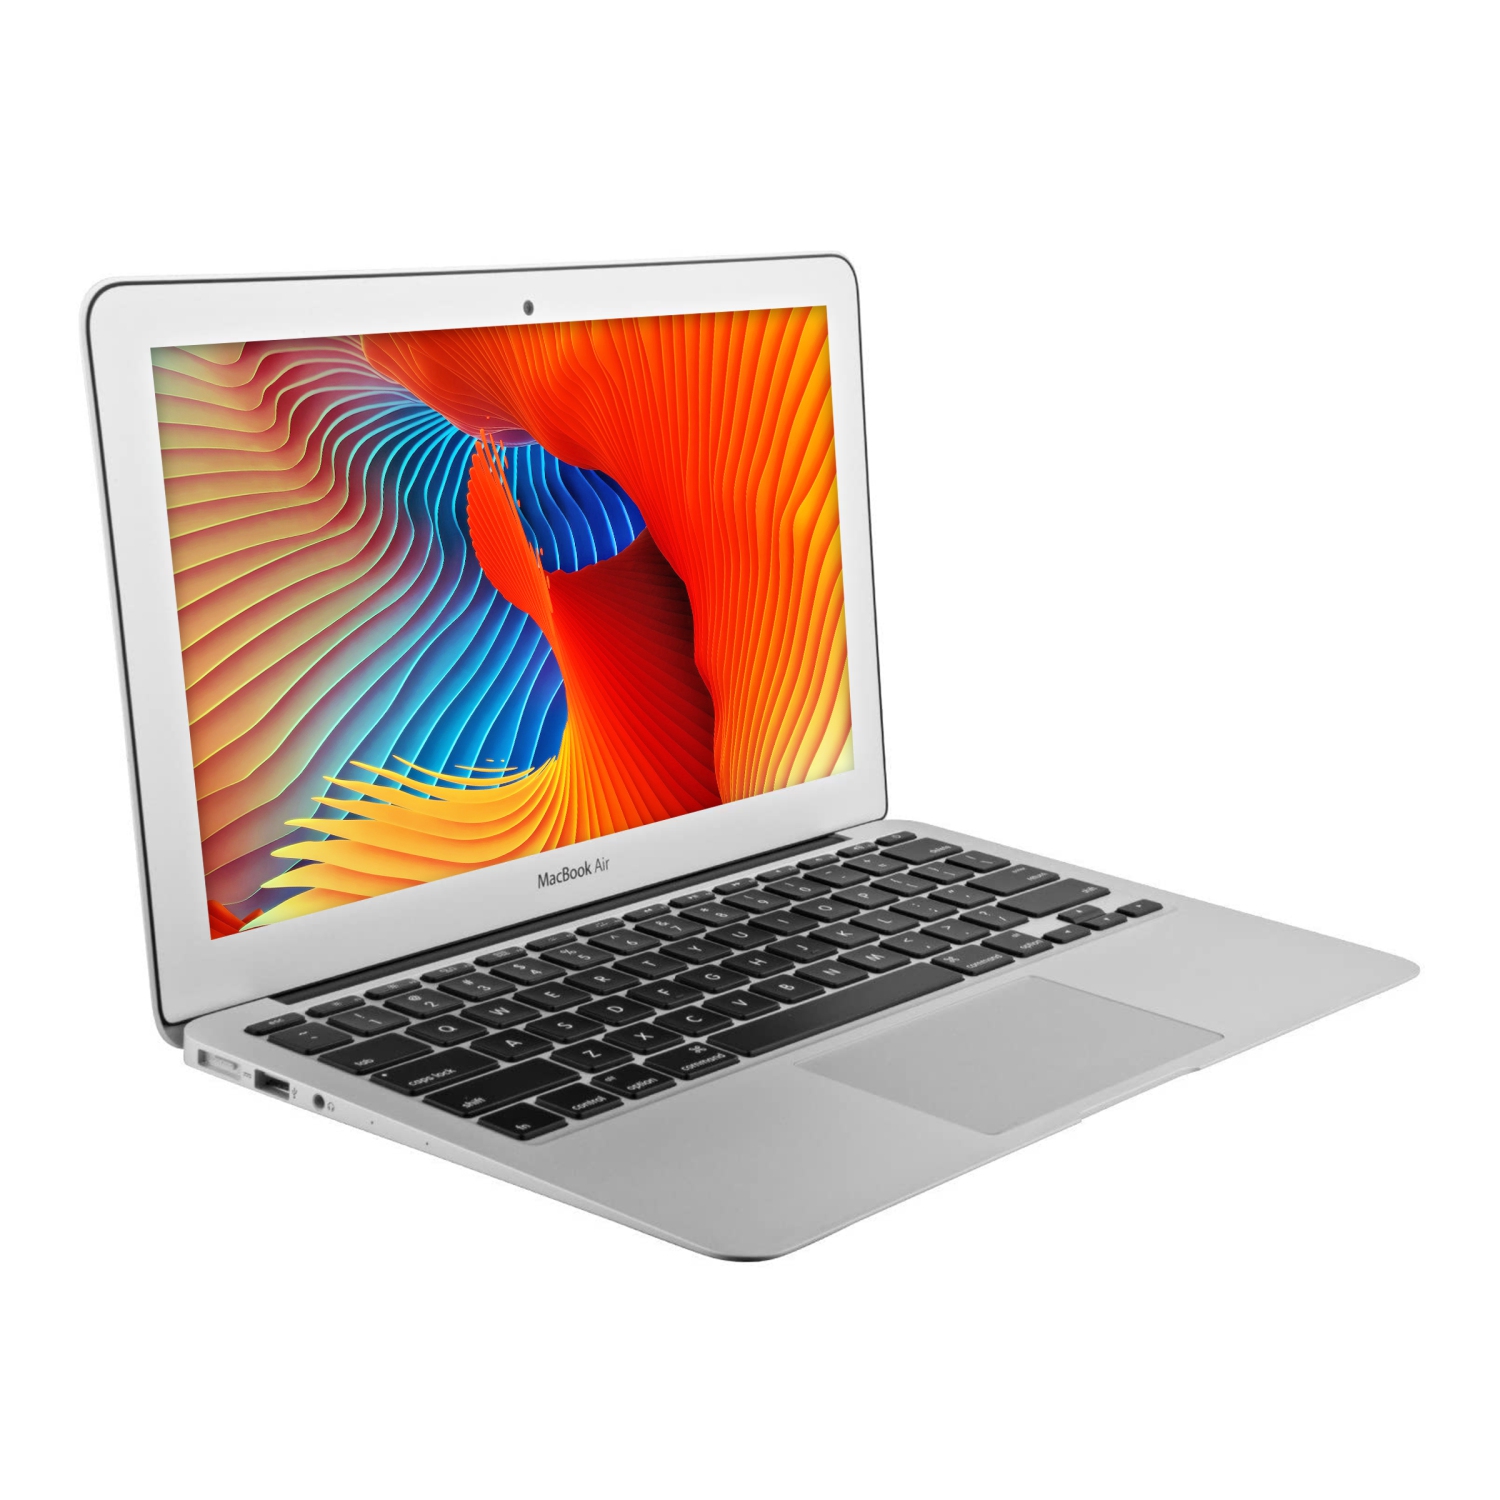 Refurbished (Good) - Apple MacBook Air MJVE2LL/A (2015) 13-inch Laptop /1.6GHz Core i5/, 4GB RMemory/ 128GB SSD/ MacOS